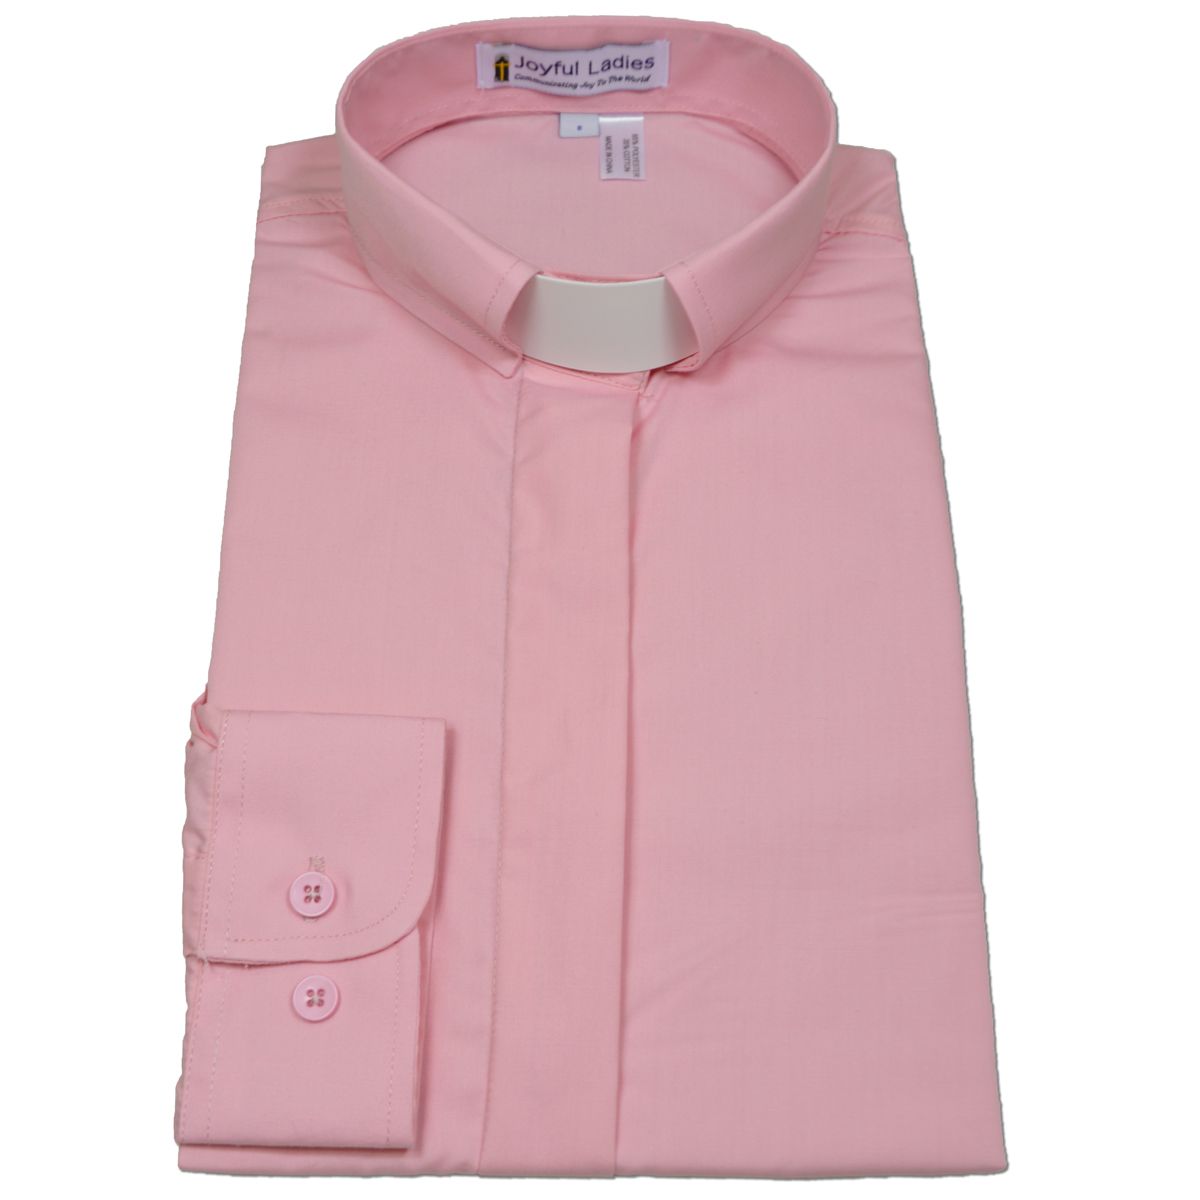 529. Women's Long-Sleeve Tab-Collar Clergy Shirt - Pink